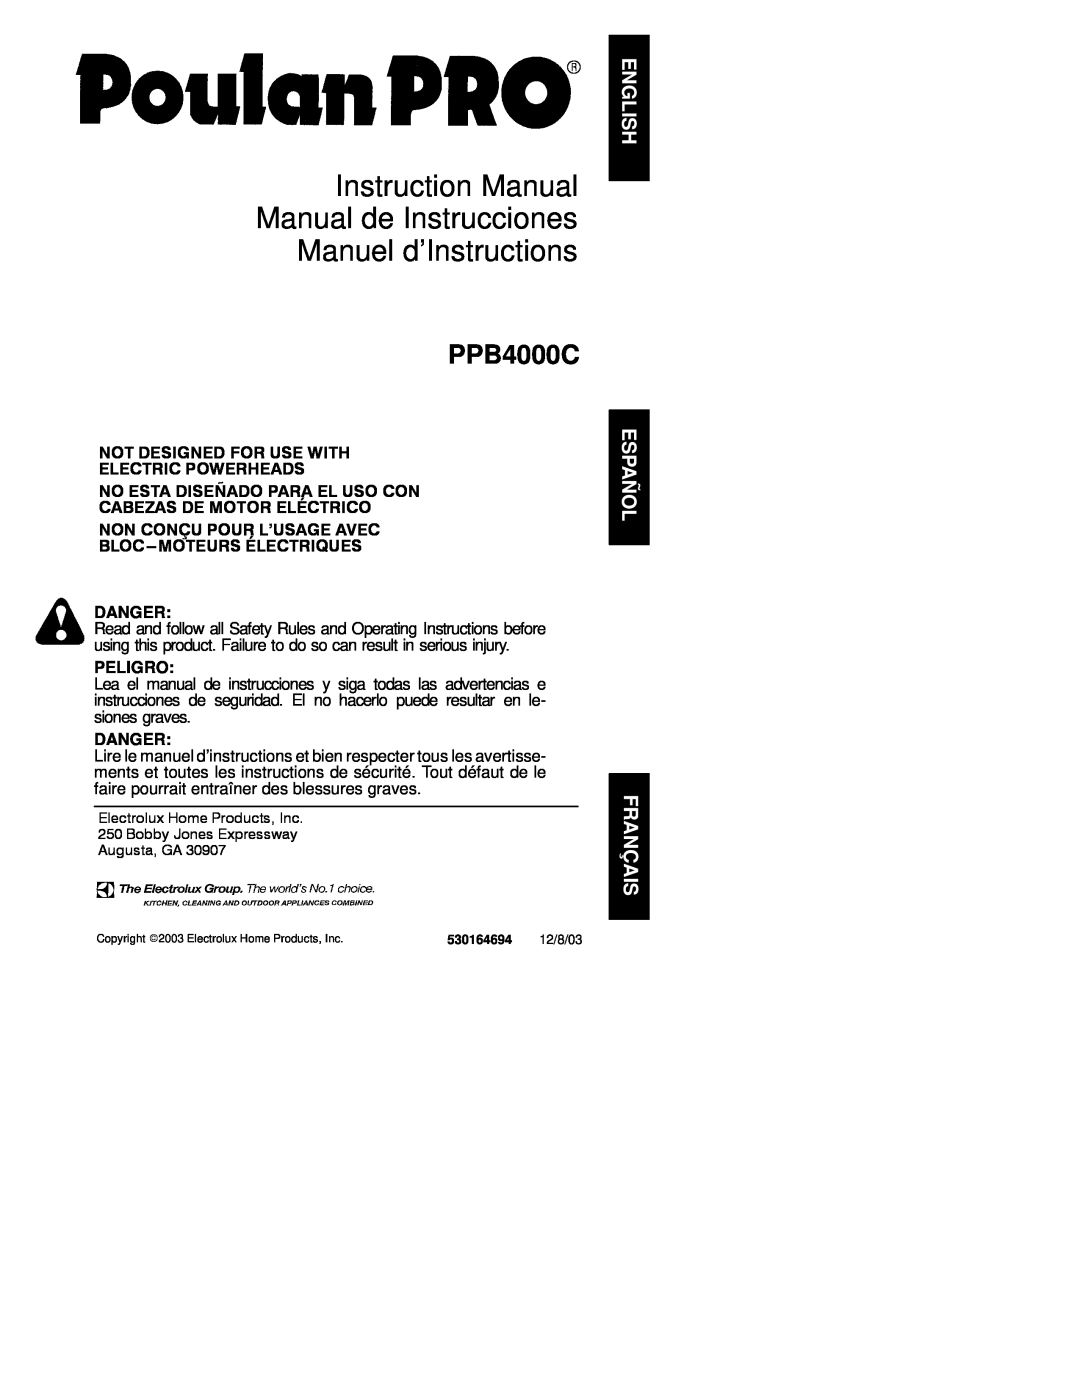 Poulan 530164694 instruction manual Instruction Manual Manual de Instrucciones Manuel d’Instructions, PPB4000C, Danger 